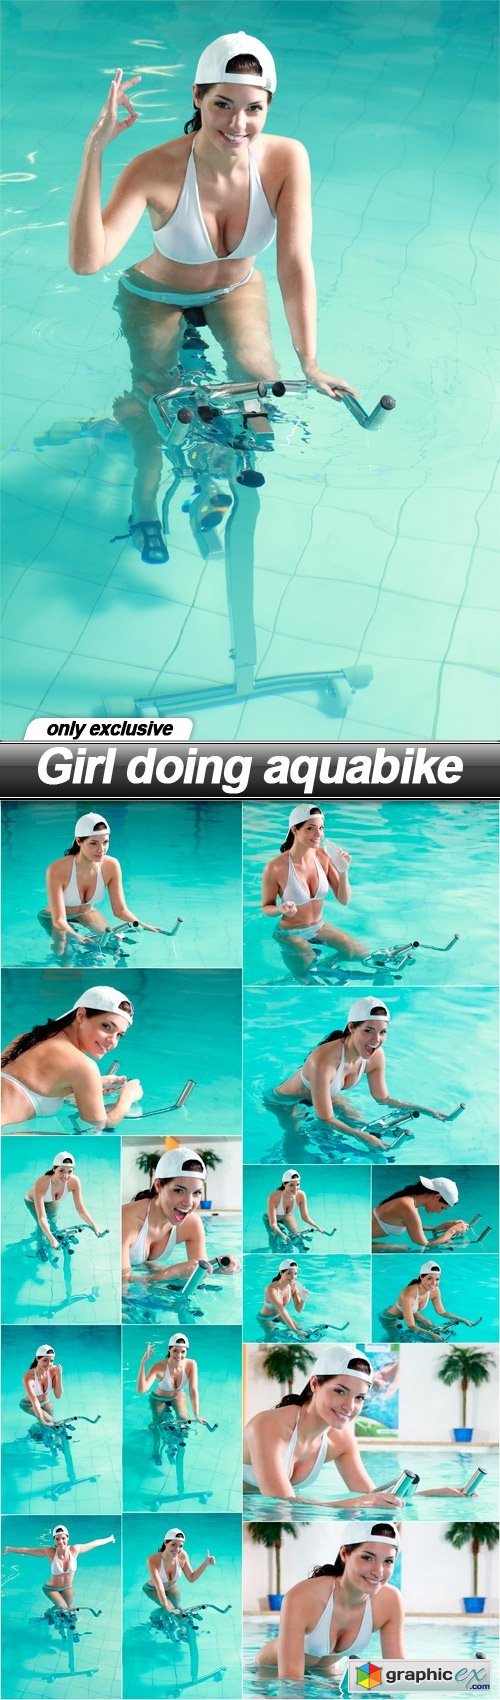 Girl doing aquabike - 16 UHQ JPEG